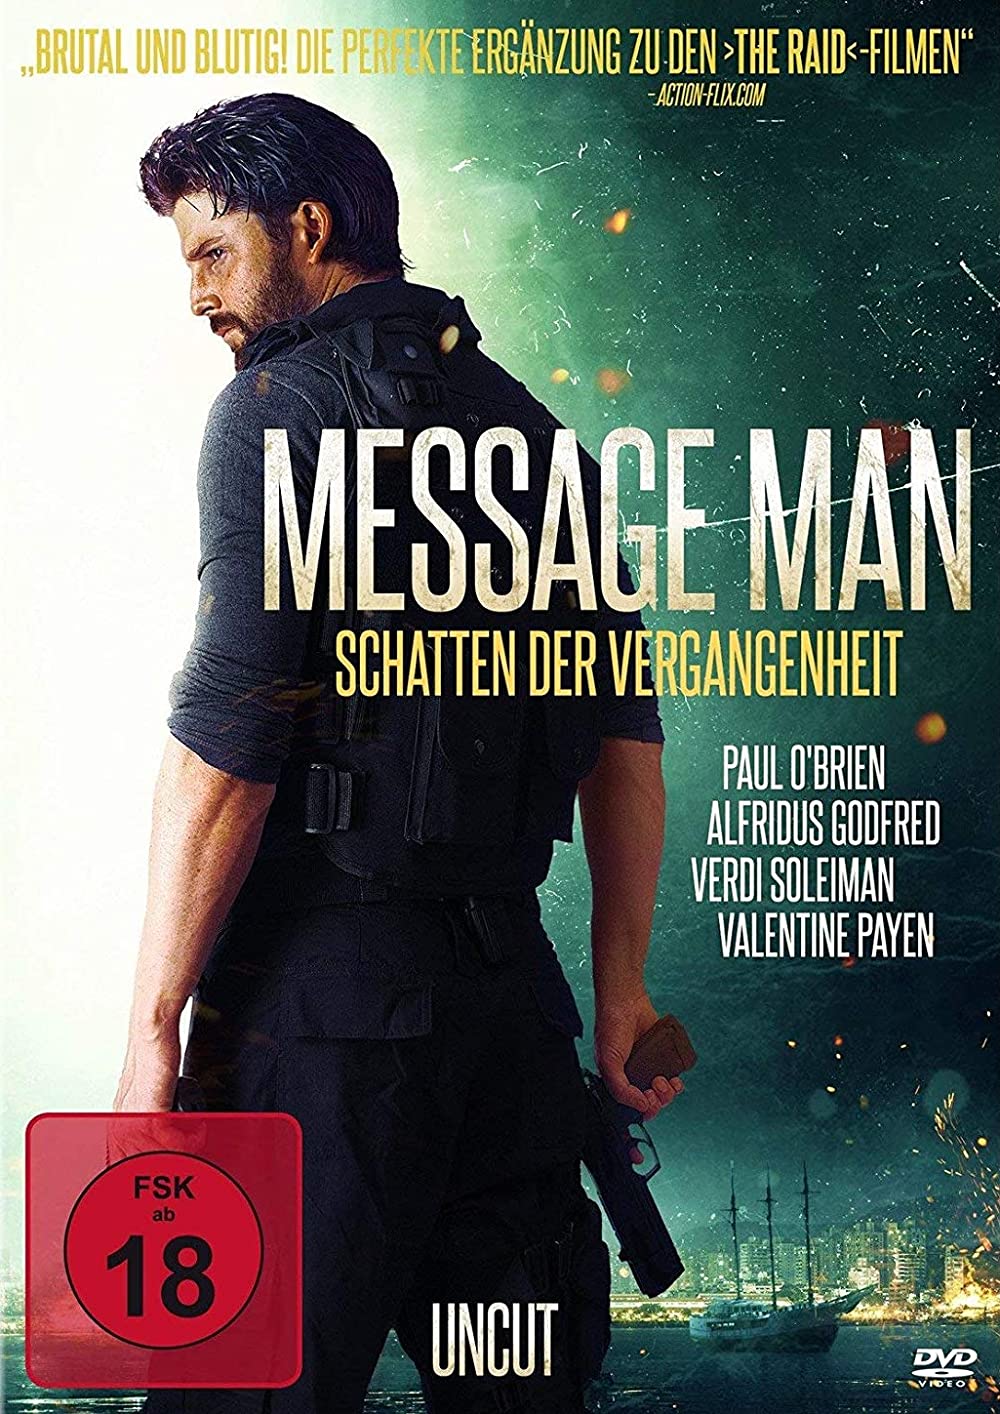 Filmbeschreibung zu Message Man